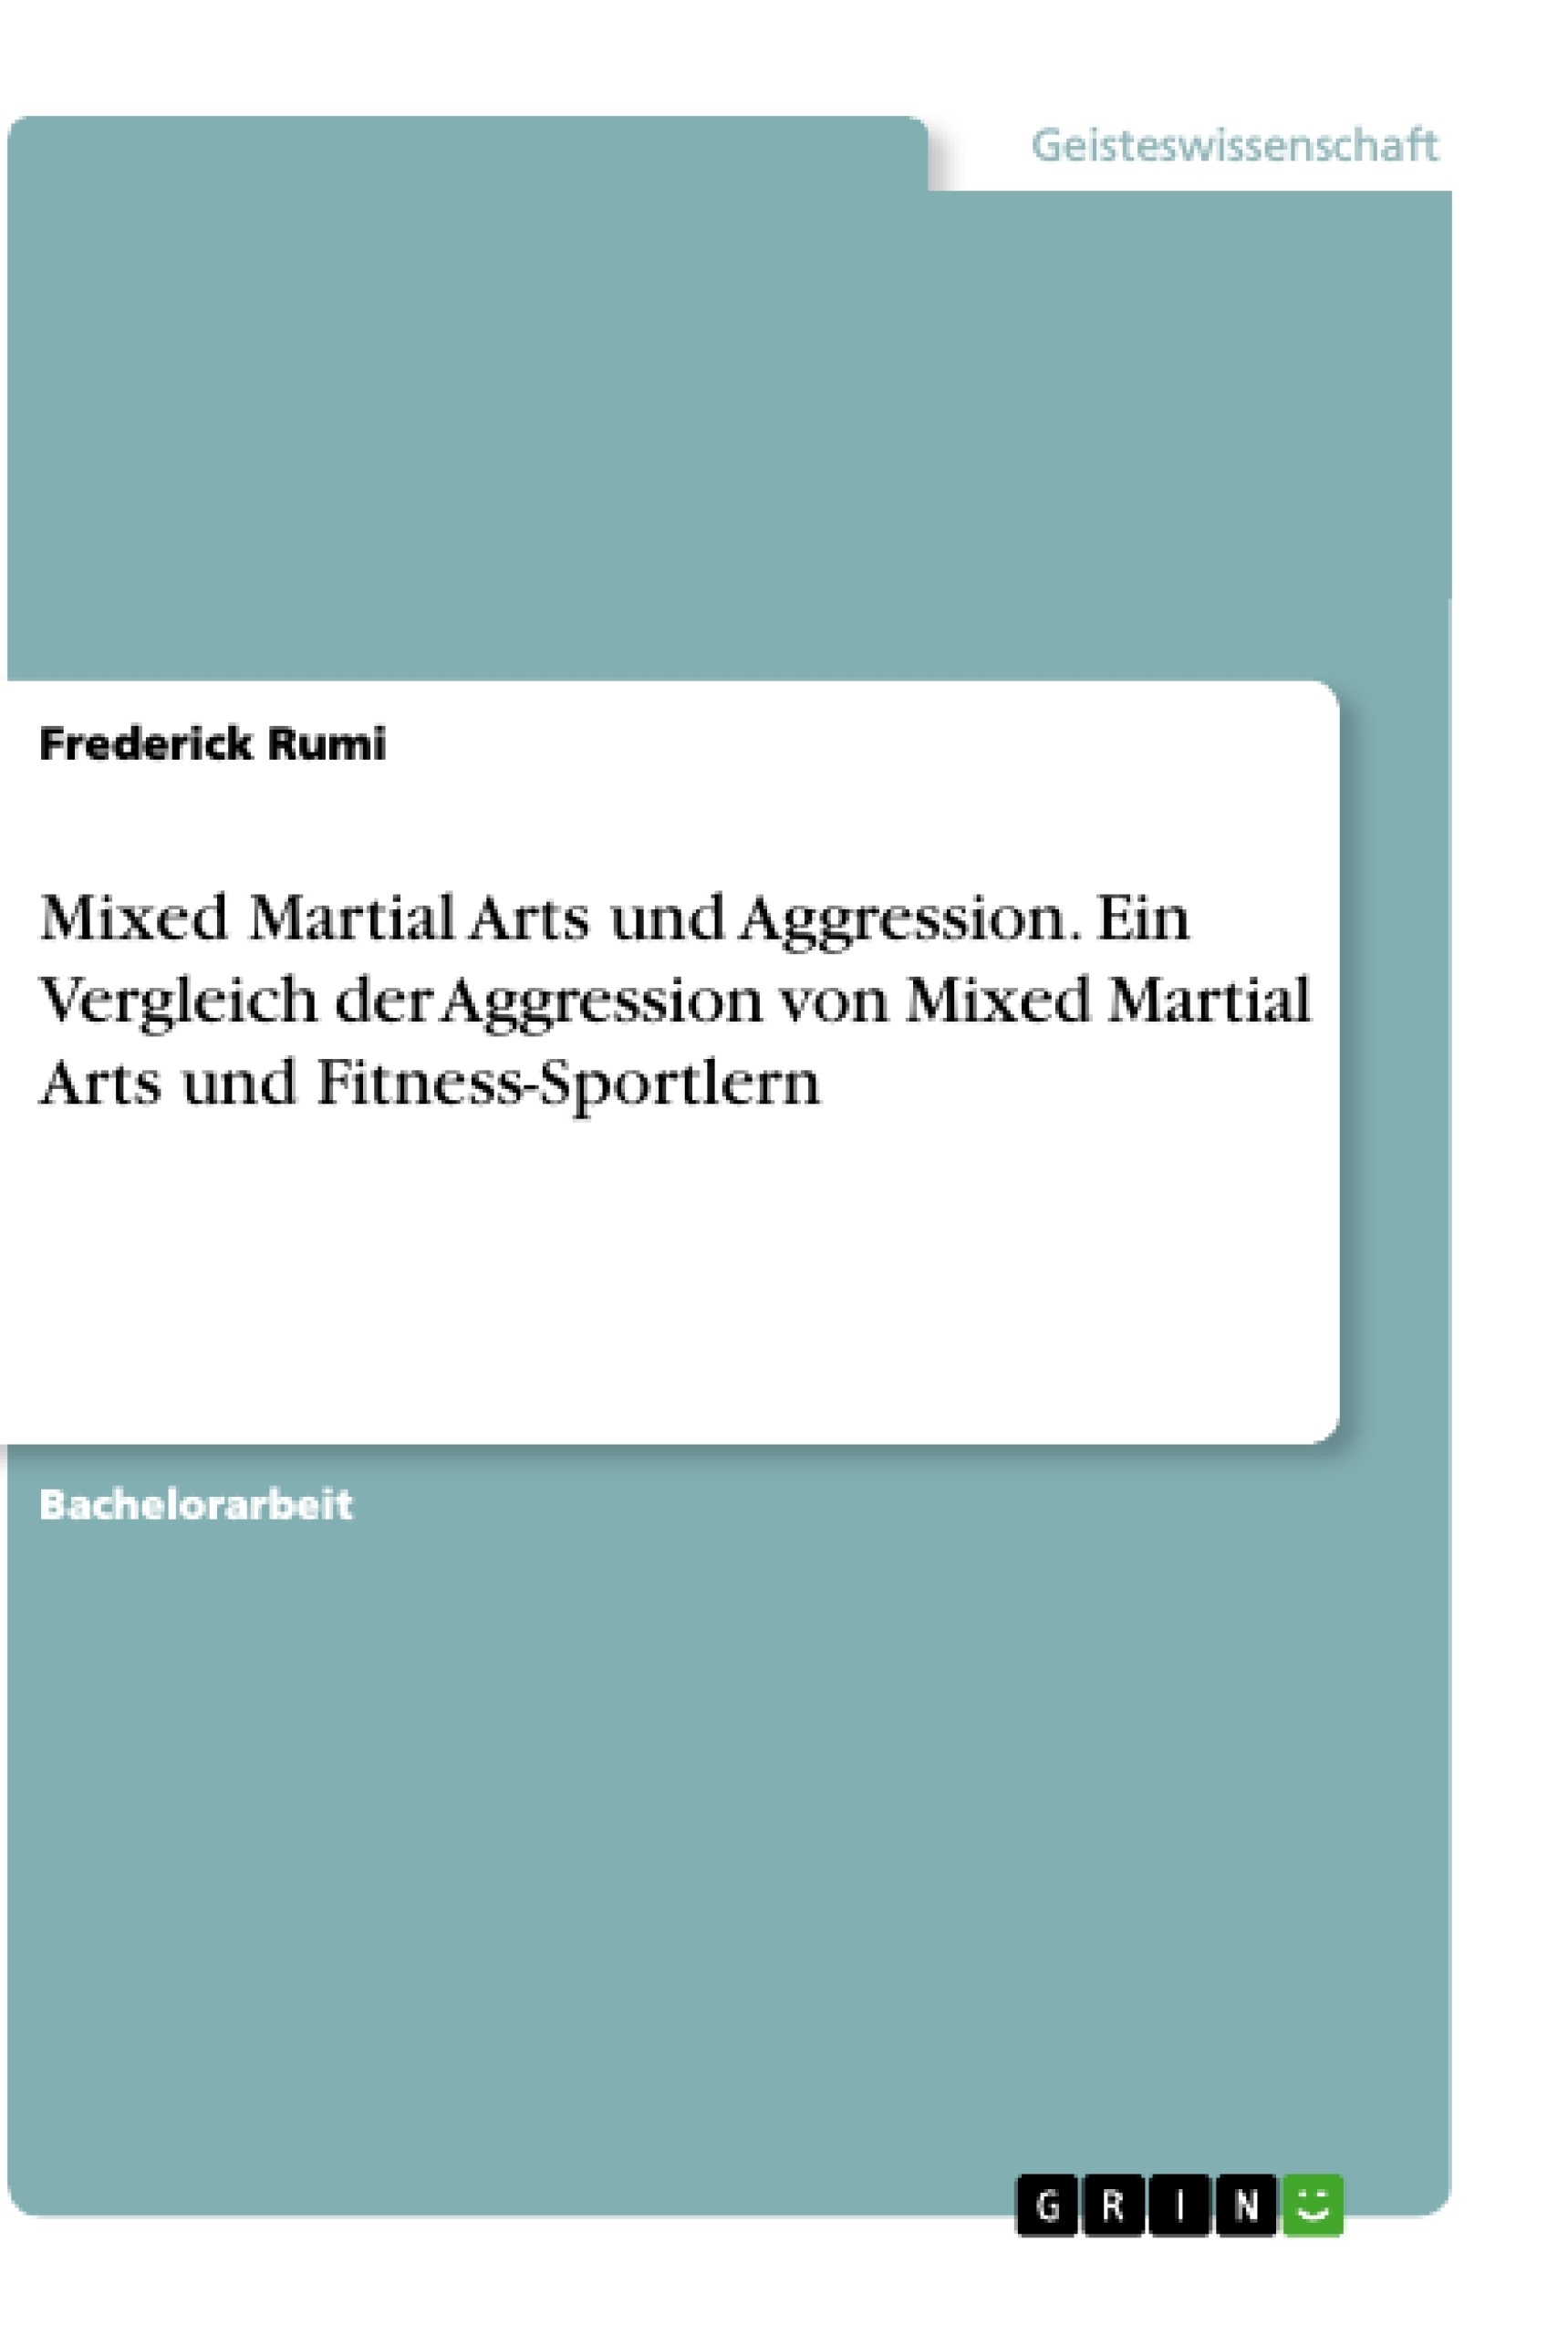 Título: Mixed Martial Arts und Aggression. Ein Vergleich der Aggression von Mixed Martial Arts und Fitness-Sportlern